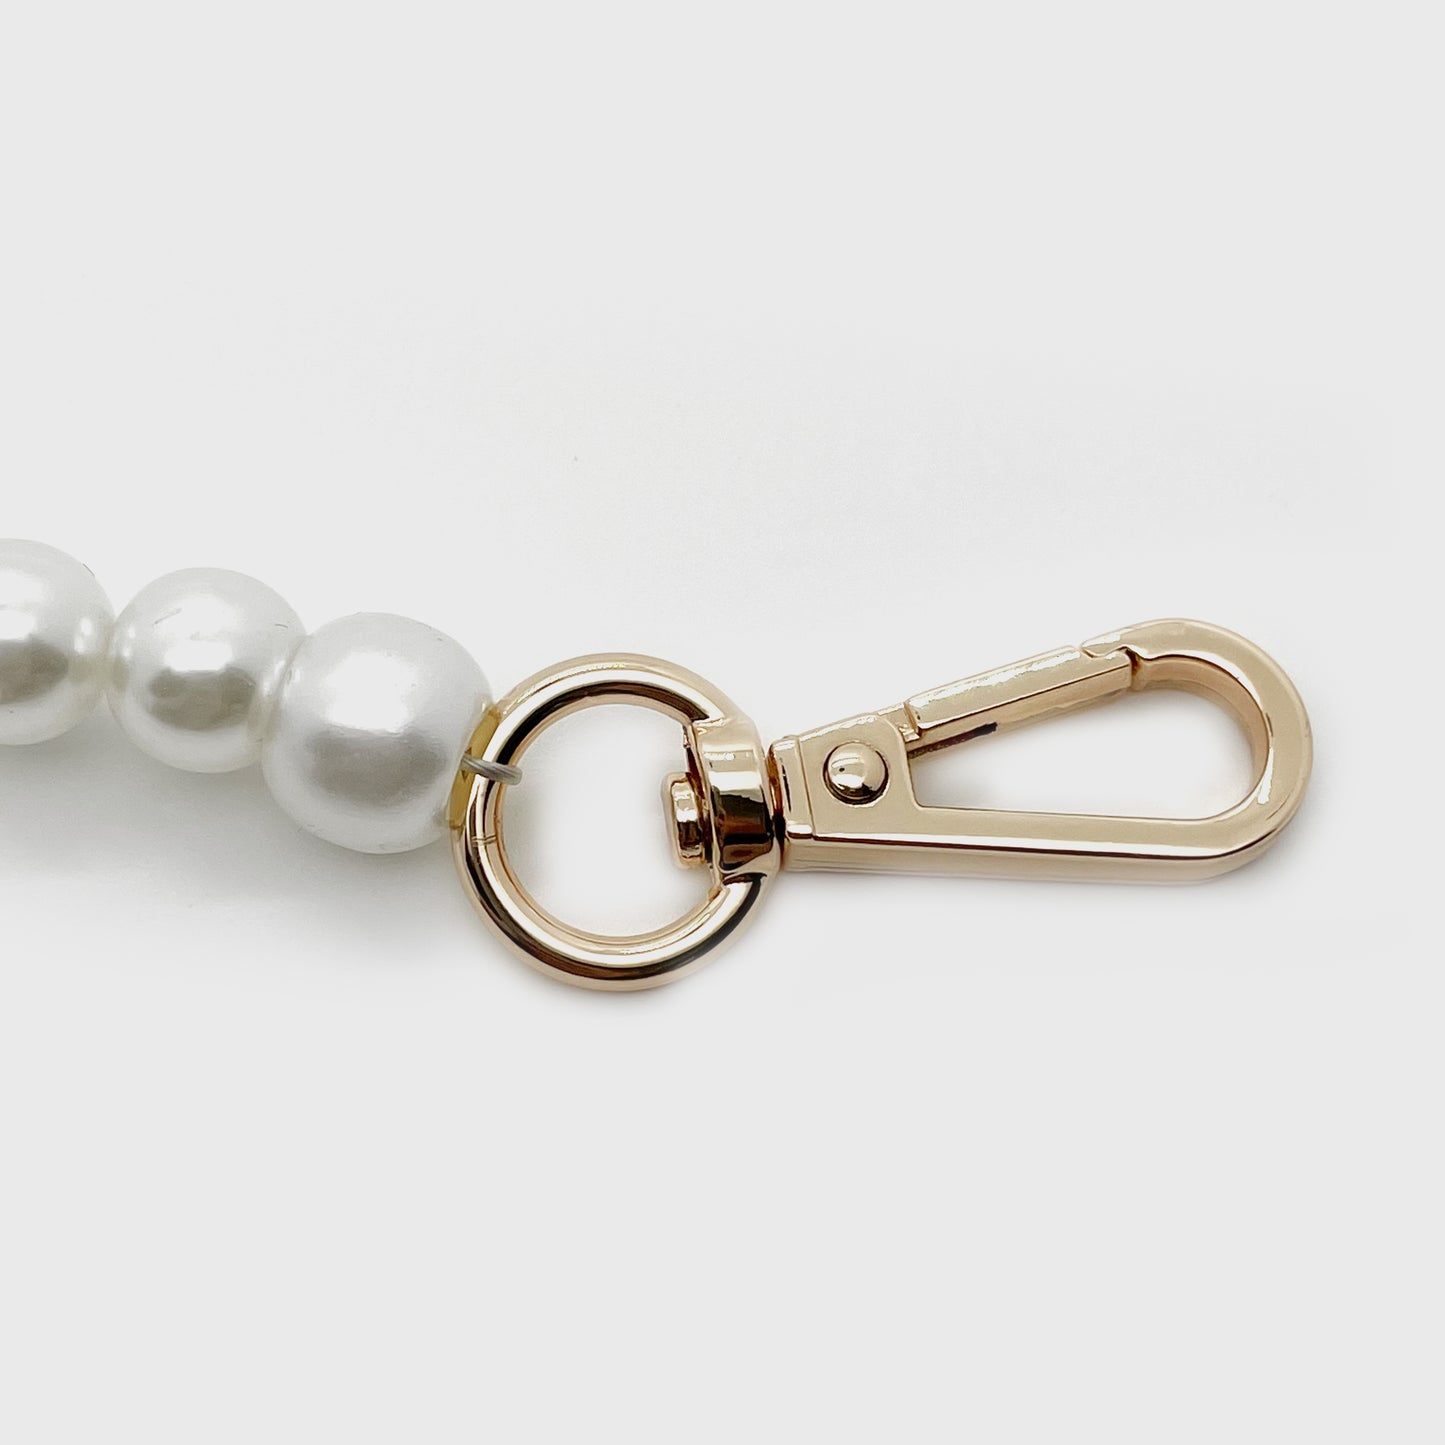 Pearl strap - 50cm (shoulder strap length) - medium pearls